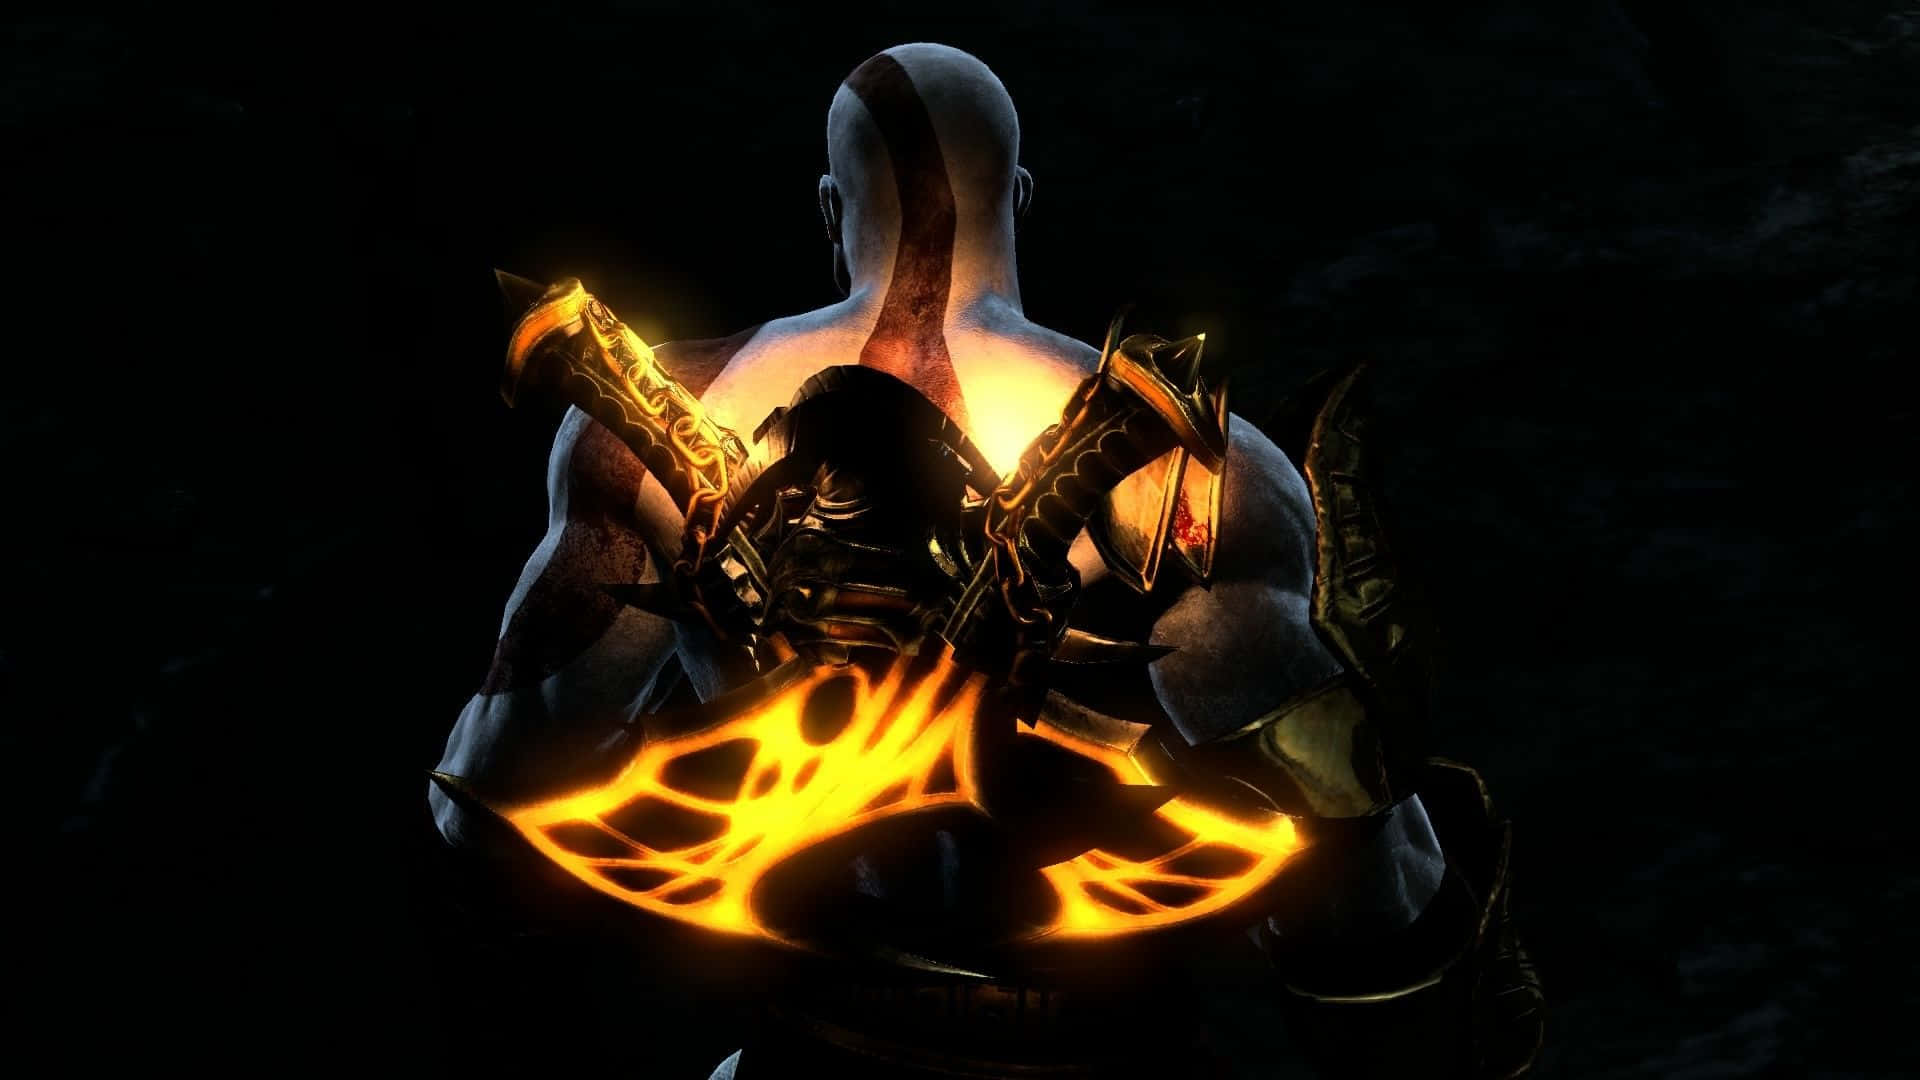 God Of War 3 - Unleash the Power of Kratos Wallpaper